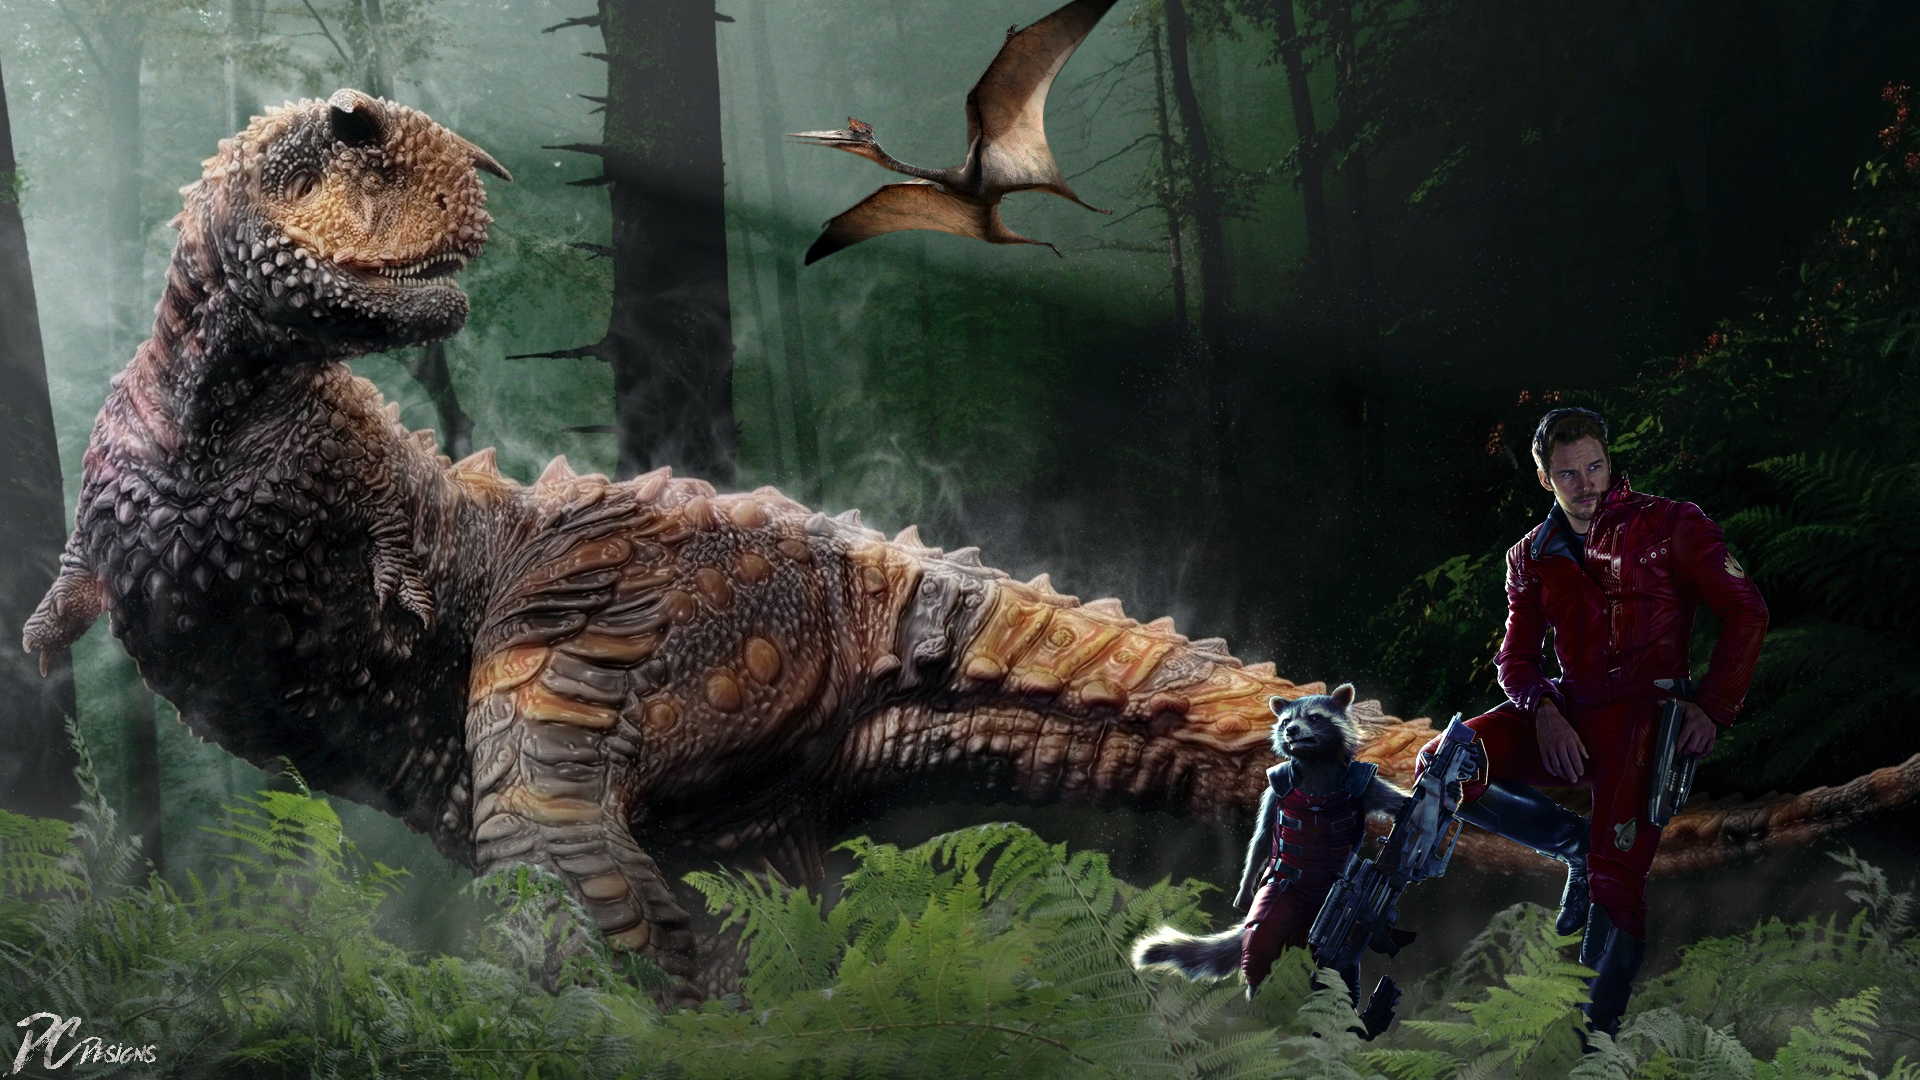 Jurassic World HD Wallpaper and Background